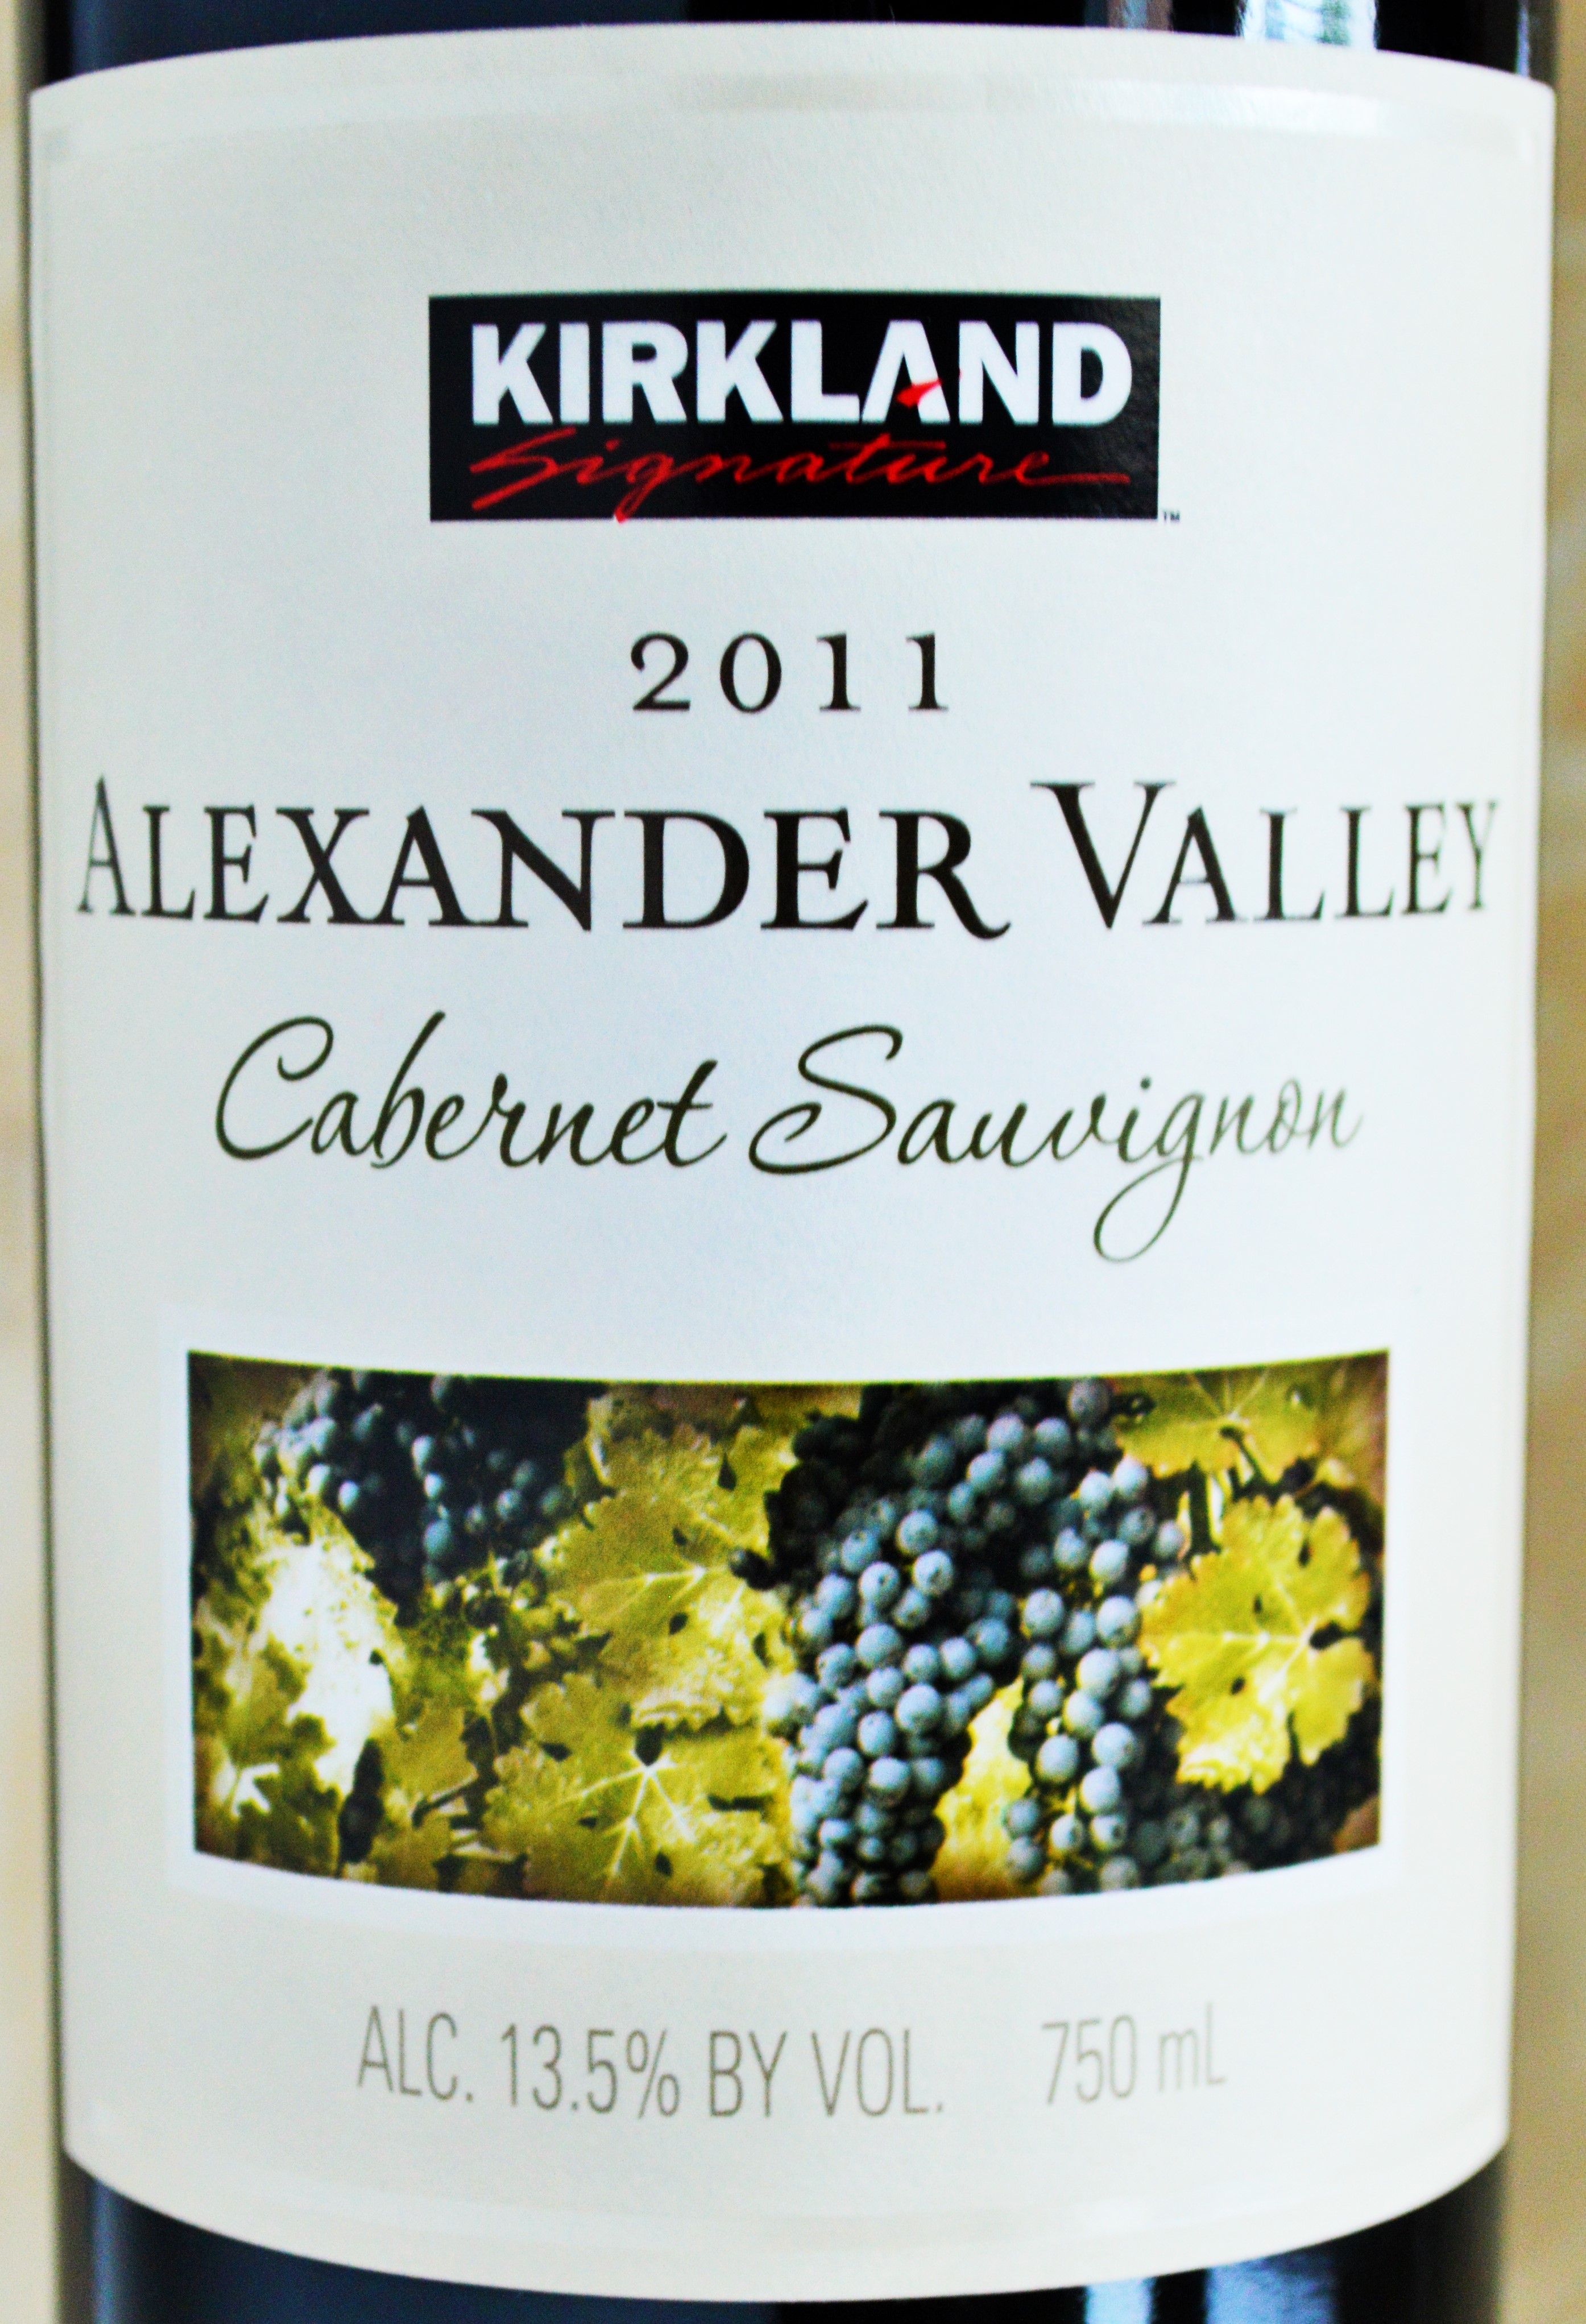 Kirkland Signature 2011 Alexander Valley Cabernet Sauvignon Review